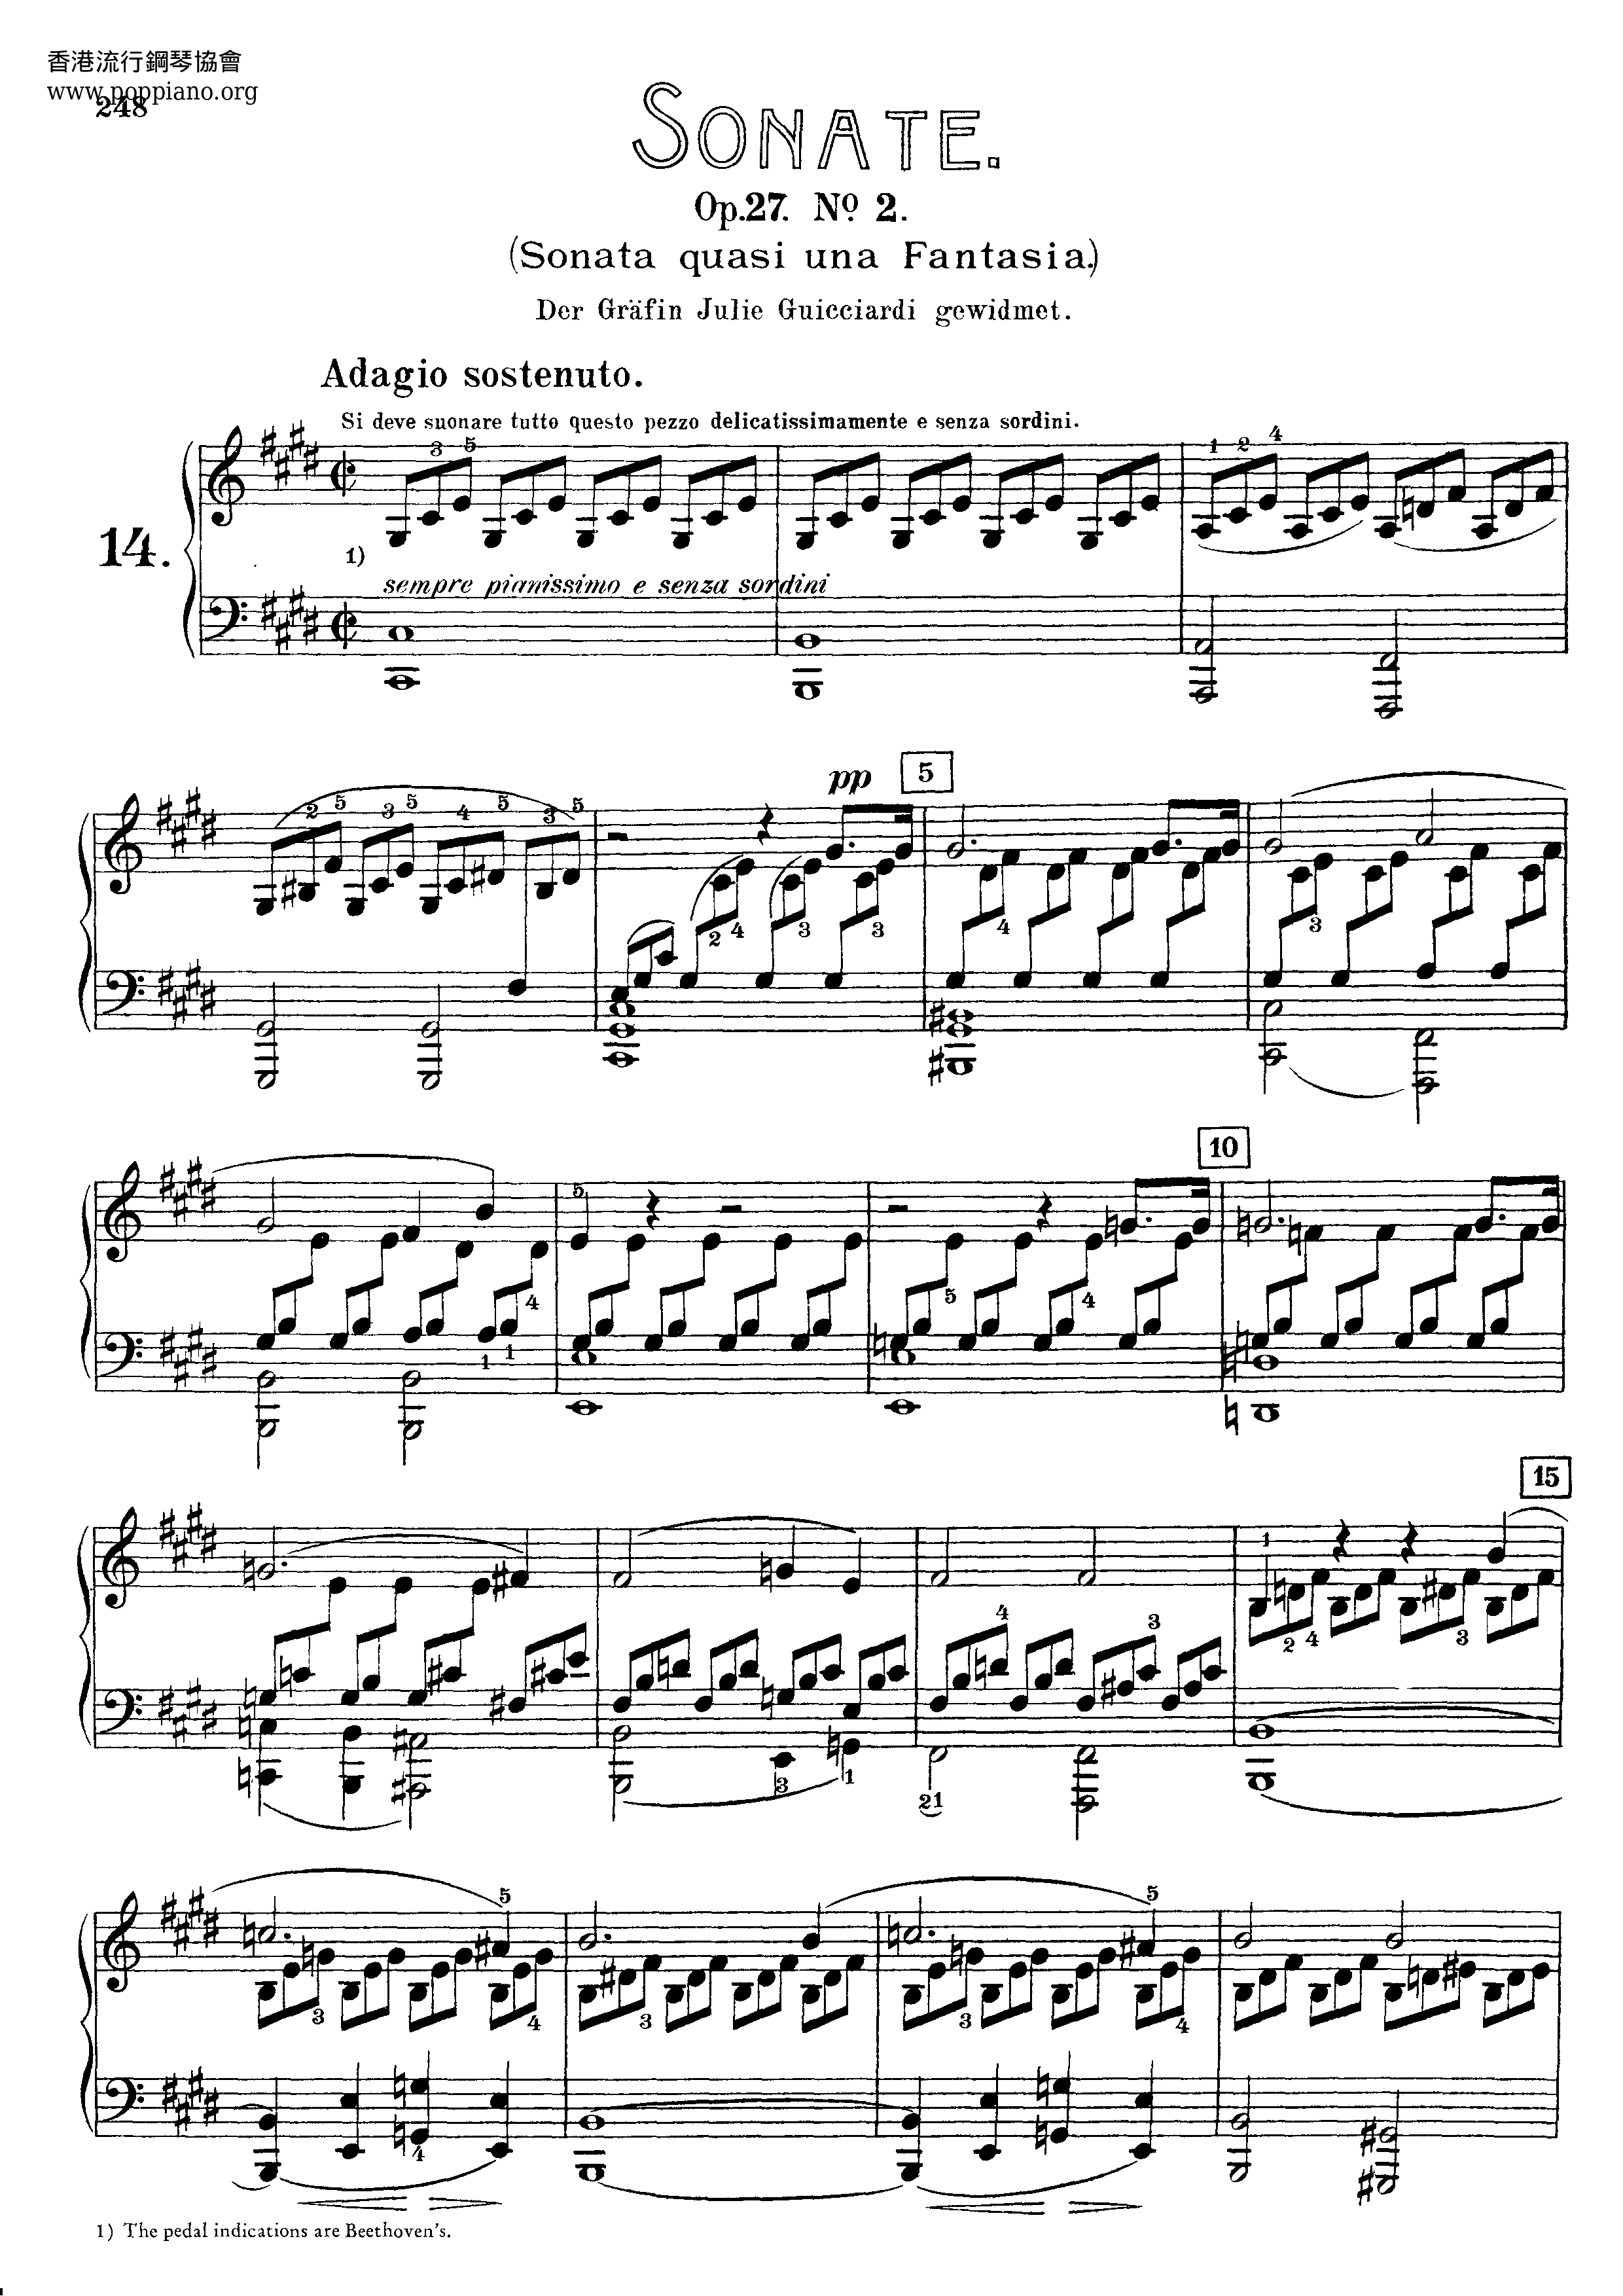 Sonata No. 14 Moonlight in C-Sharp Minor, Op. 27 No. 2: I. Adagio sostenuto Score